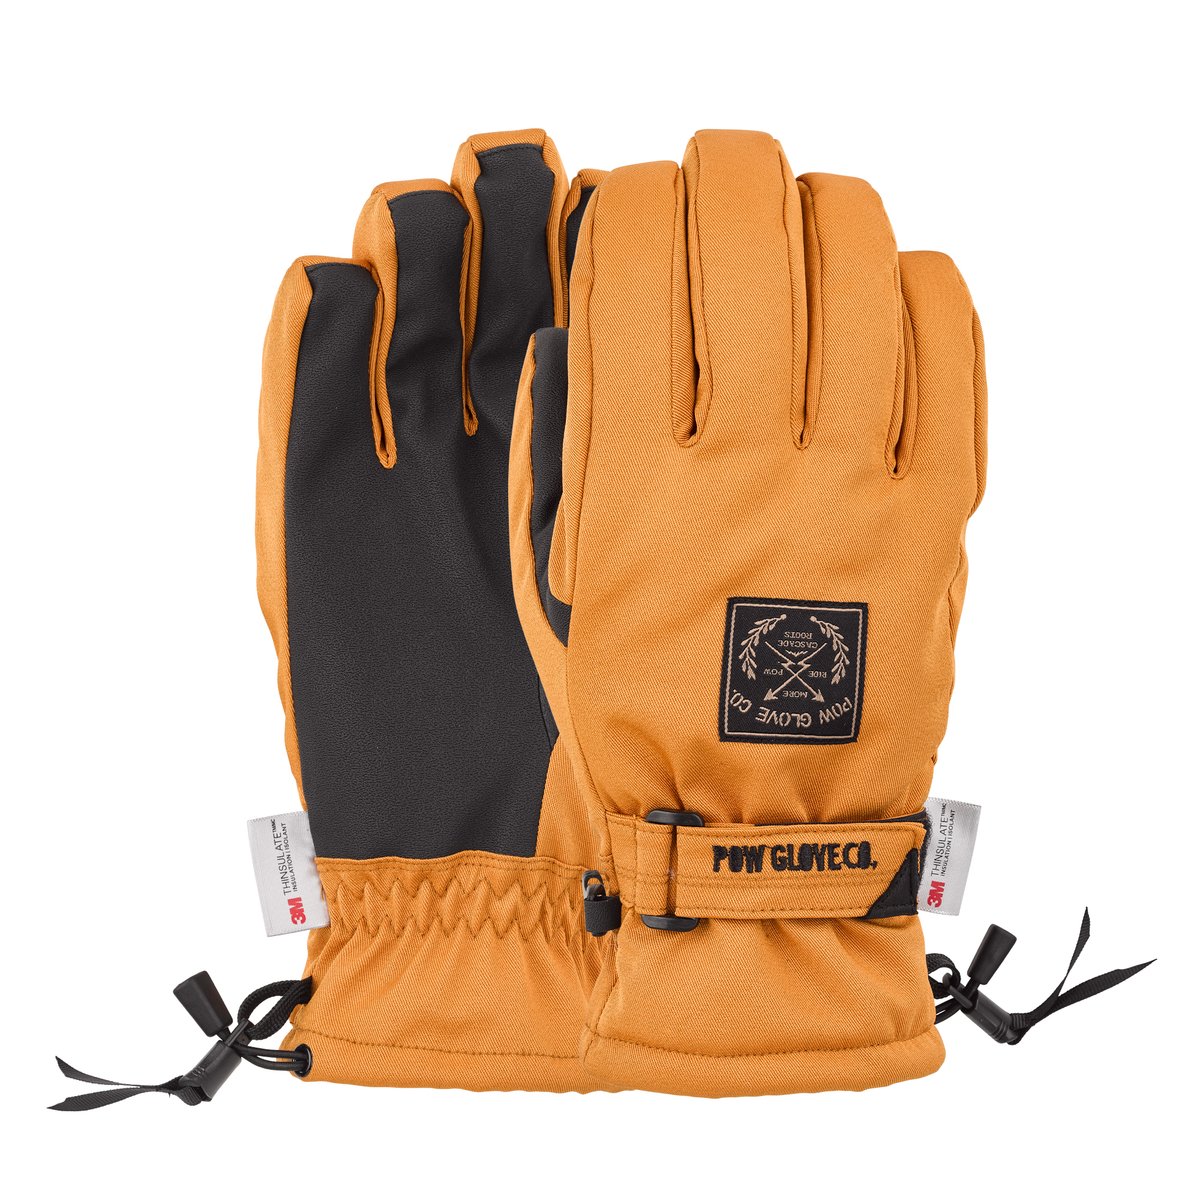 Pow Glove Company XG Mid Ski and Snowboard Glove Tobacco Tan Brown